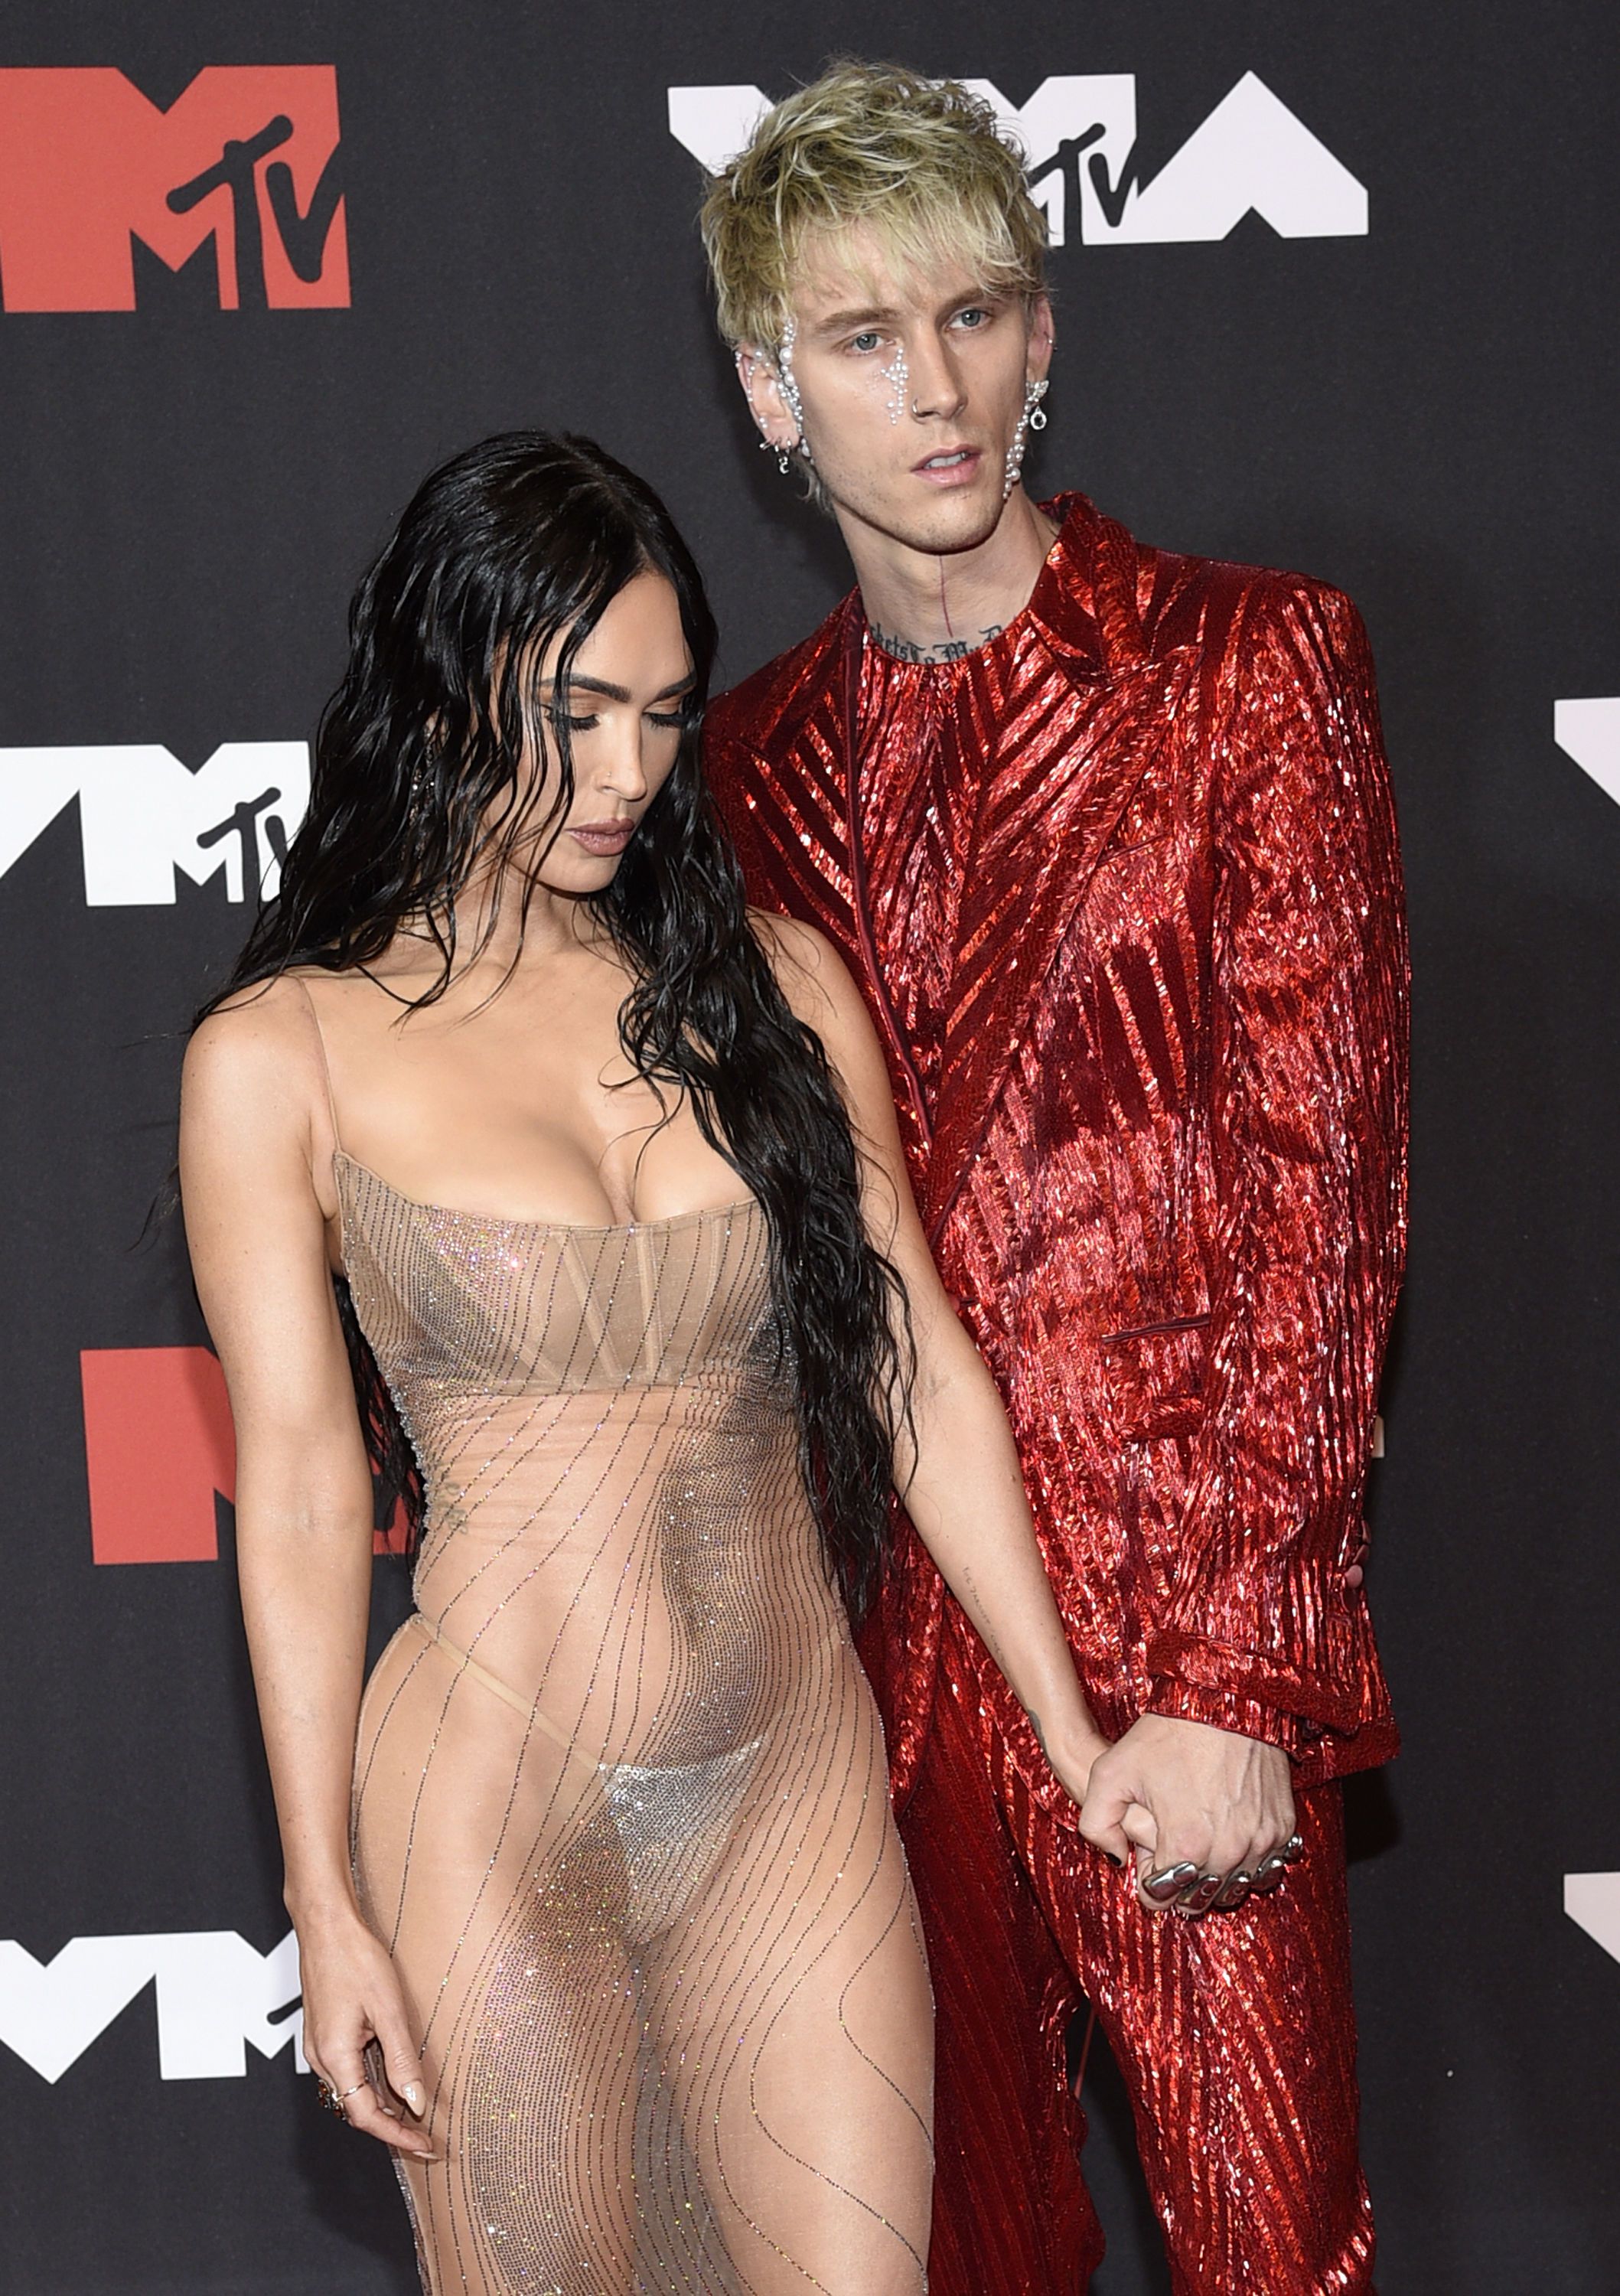    Machine Gun Kelly  MTV Video Music Awards / © Associated Press qhiqquiqxriqzzkmp